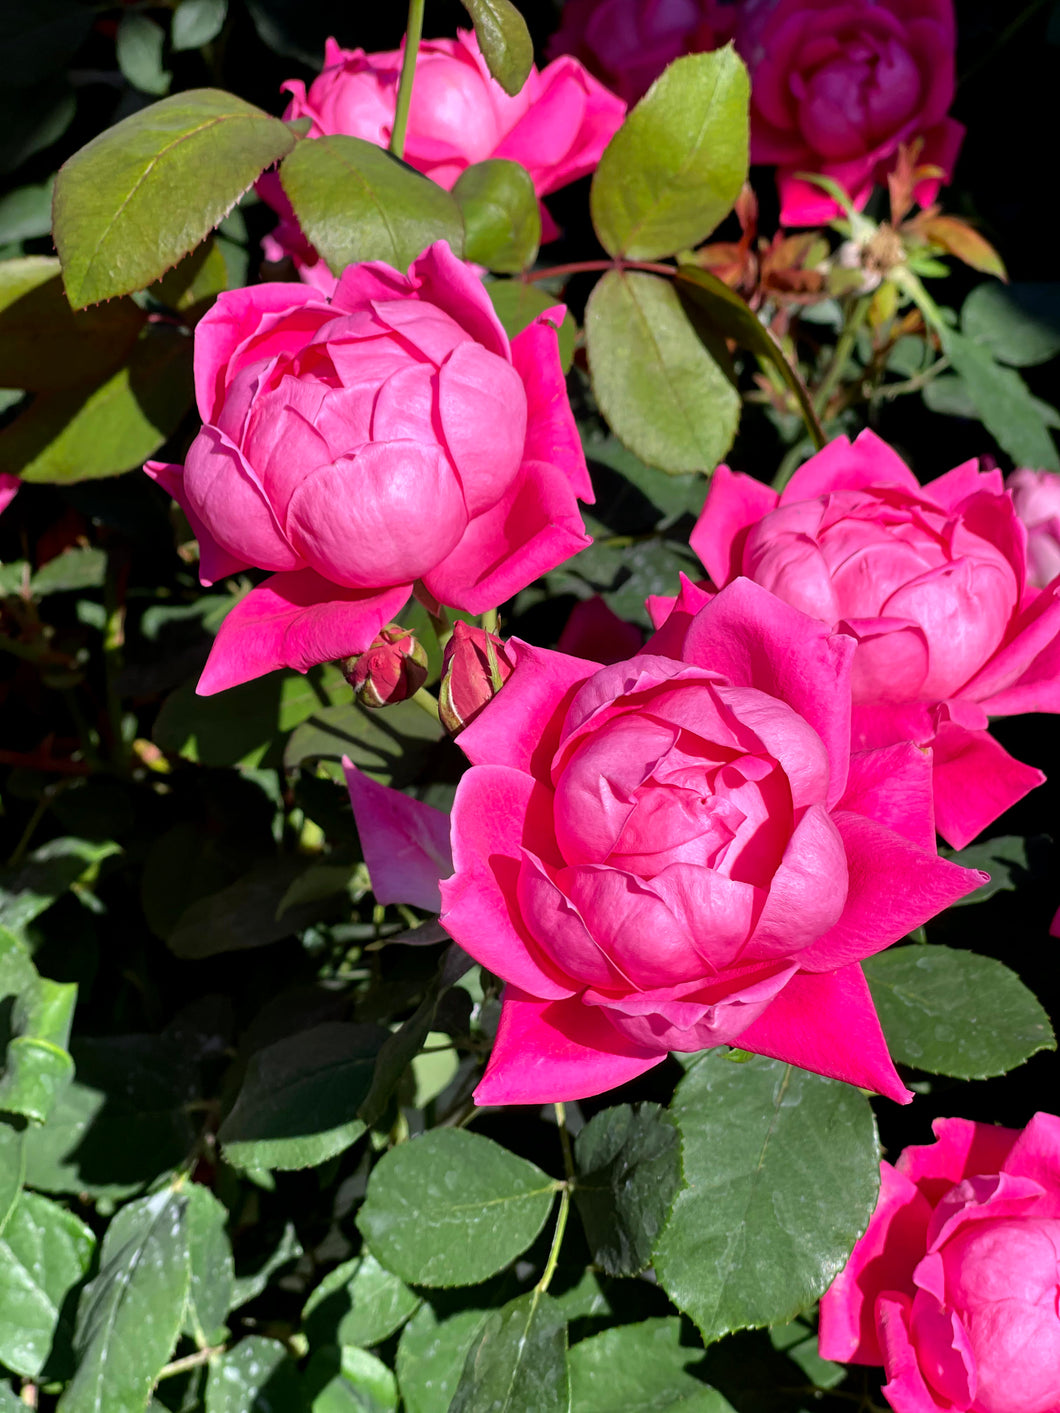 Growing Roses: May 18th